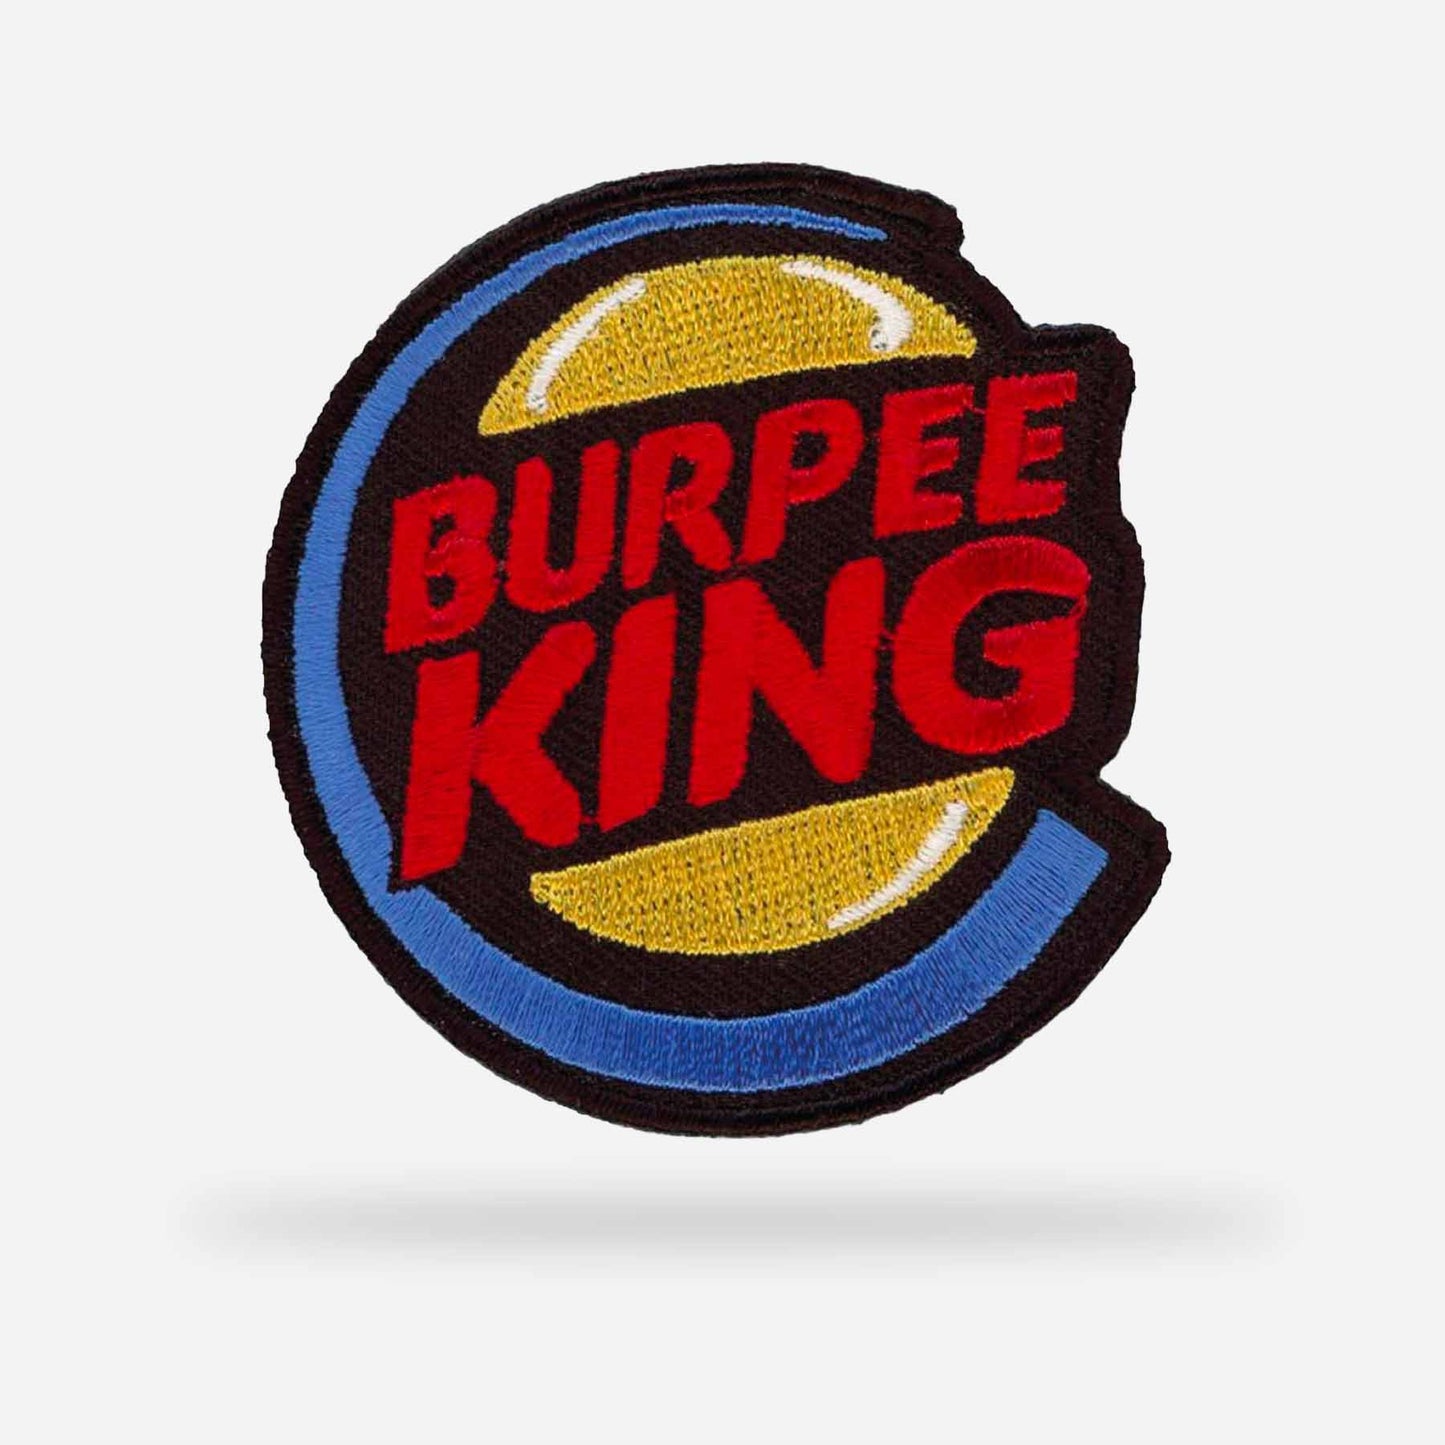 Patch - Burpee King